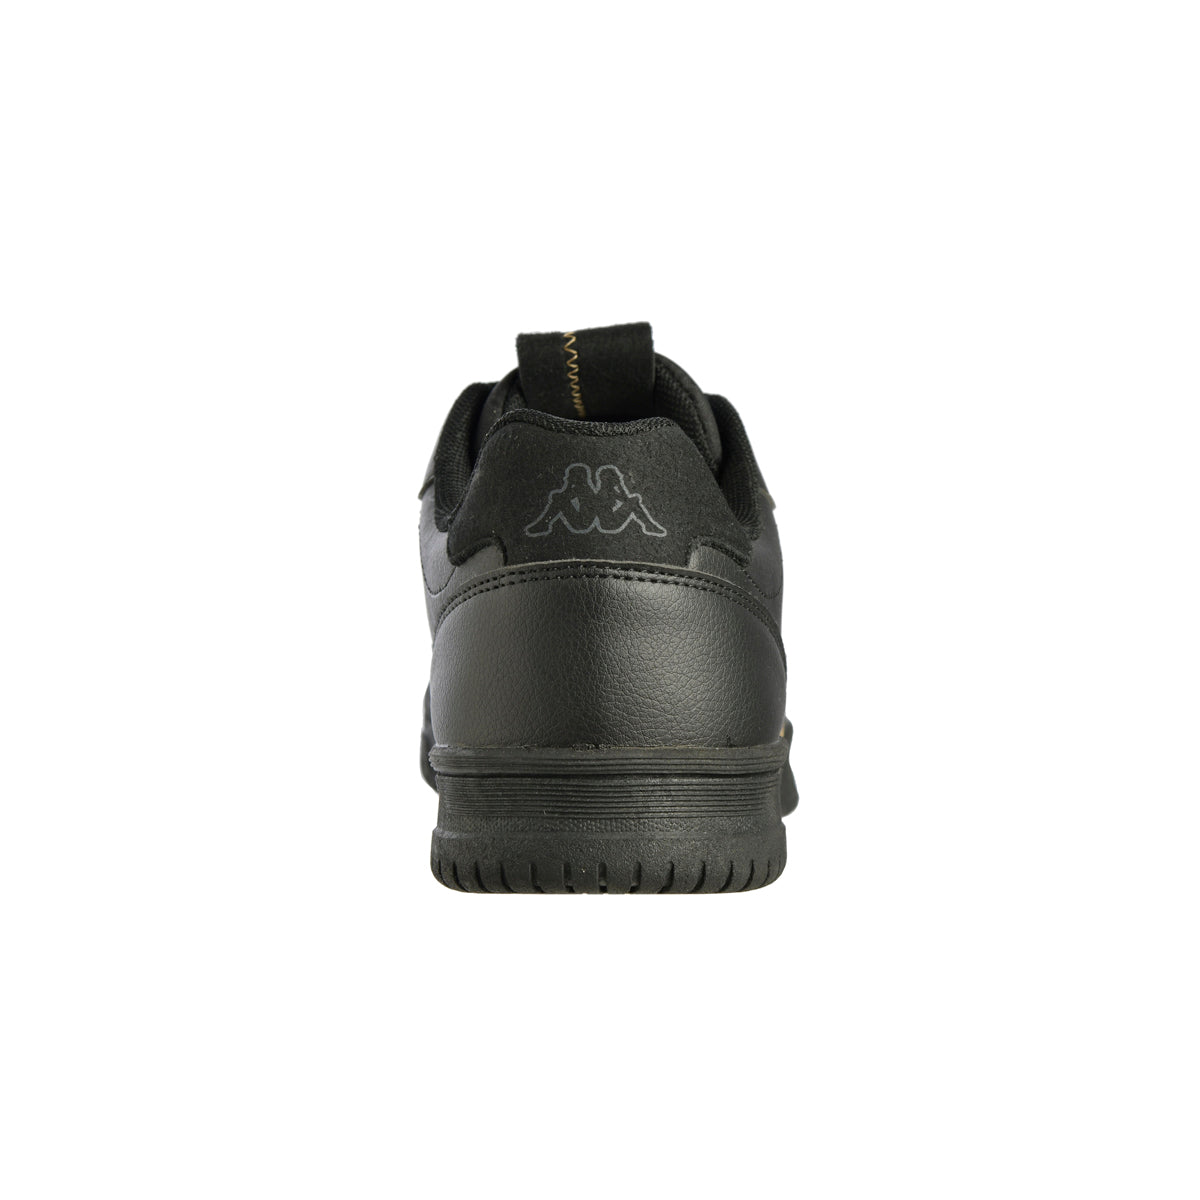 Chaussures lifestyle Tonetis Noir homme - image 3